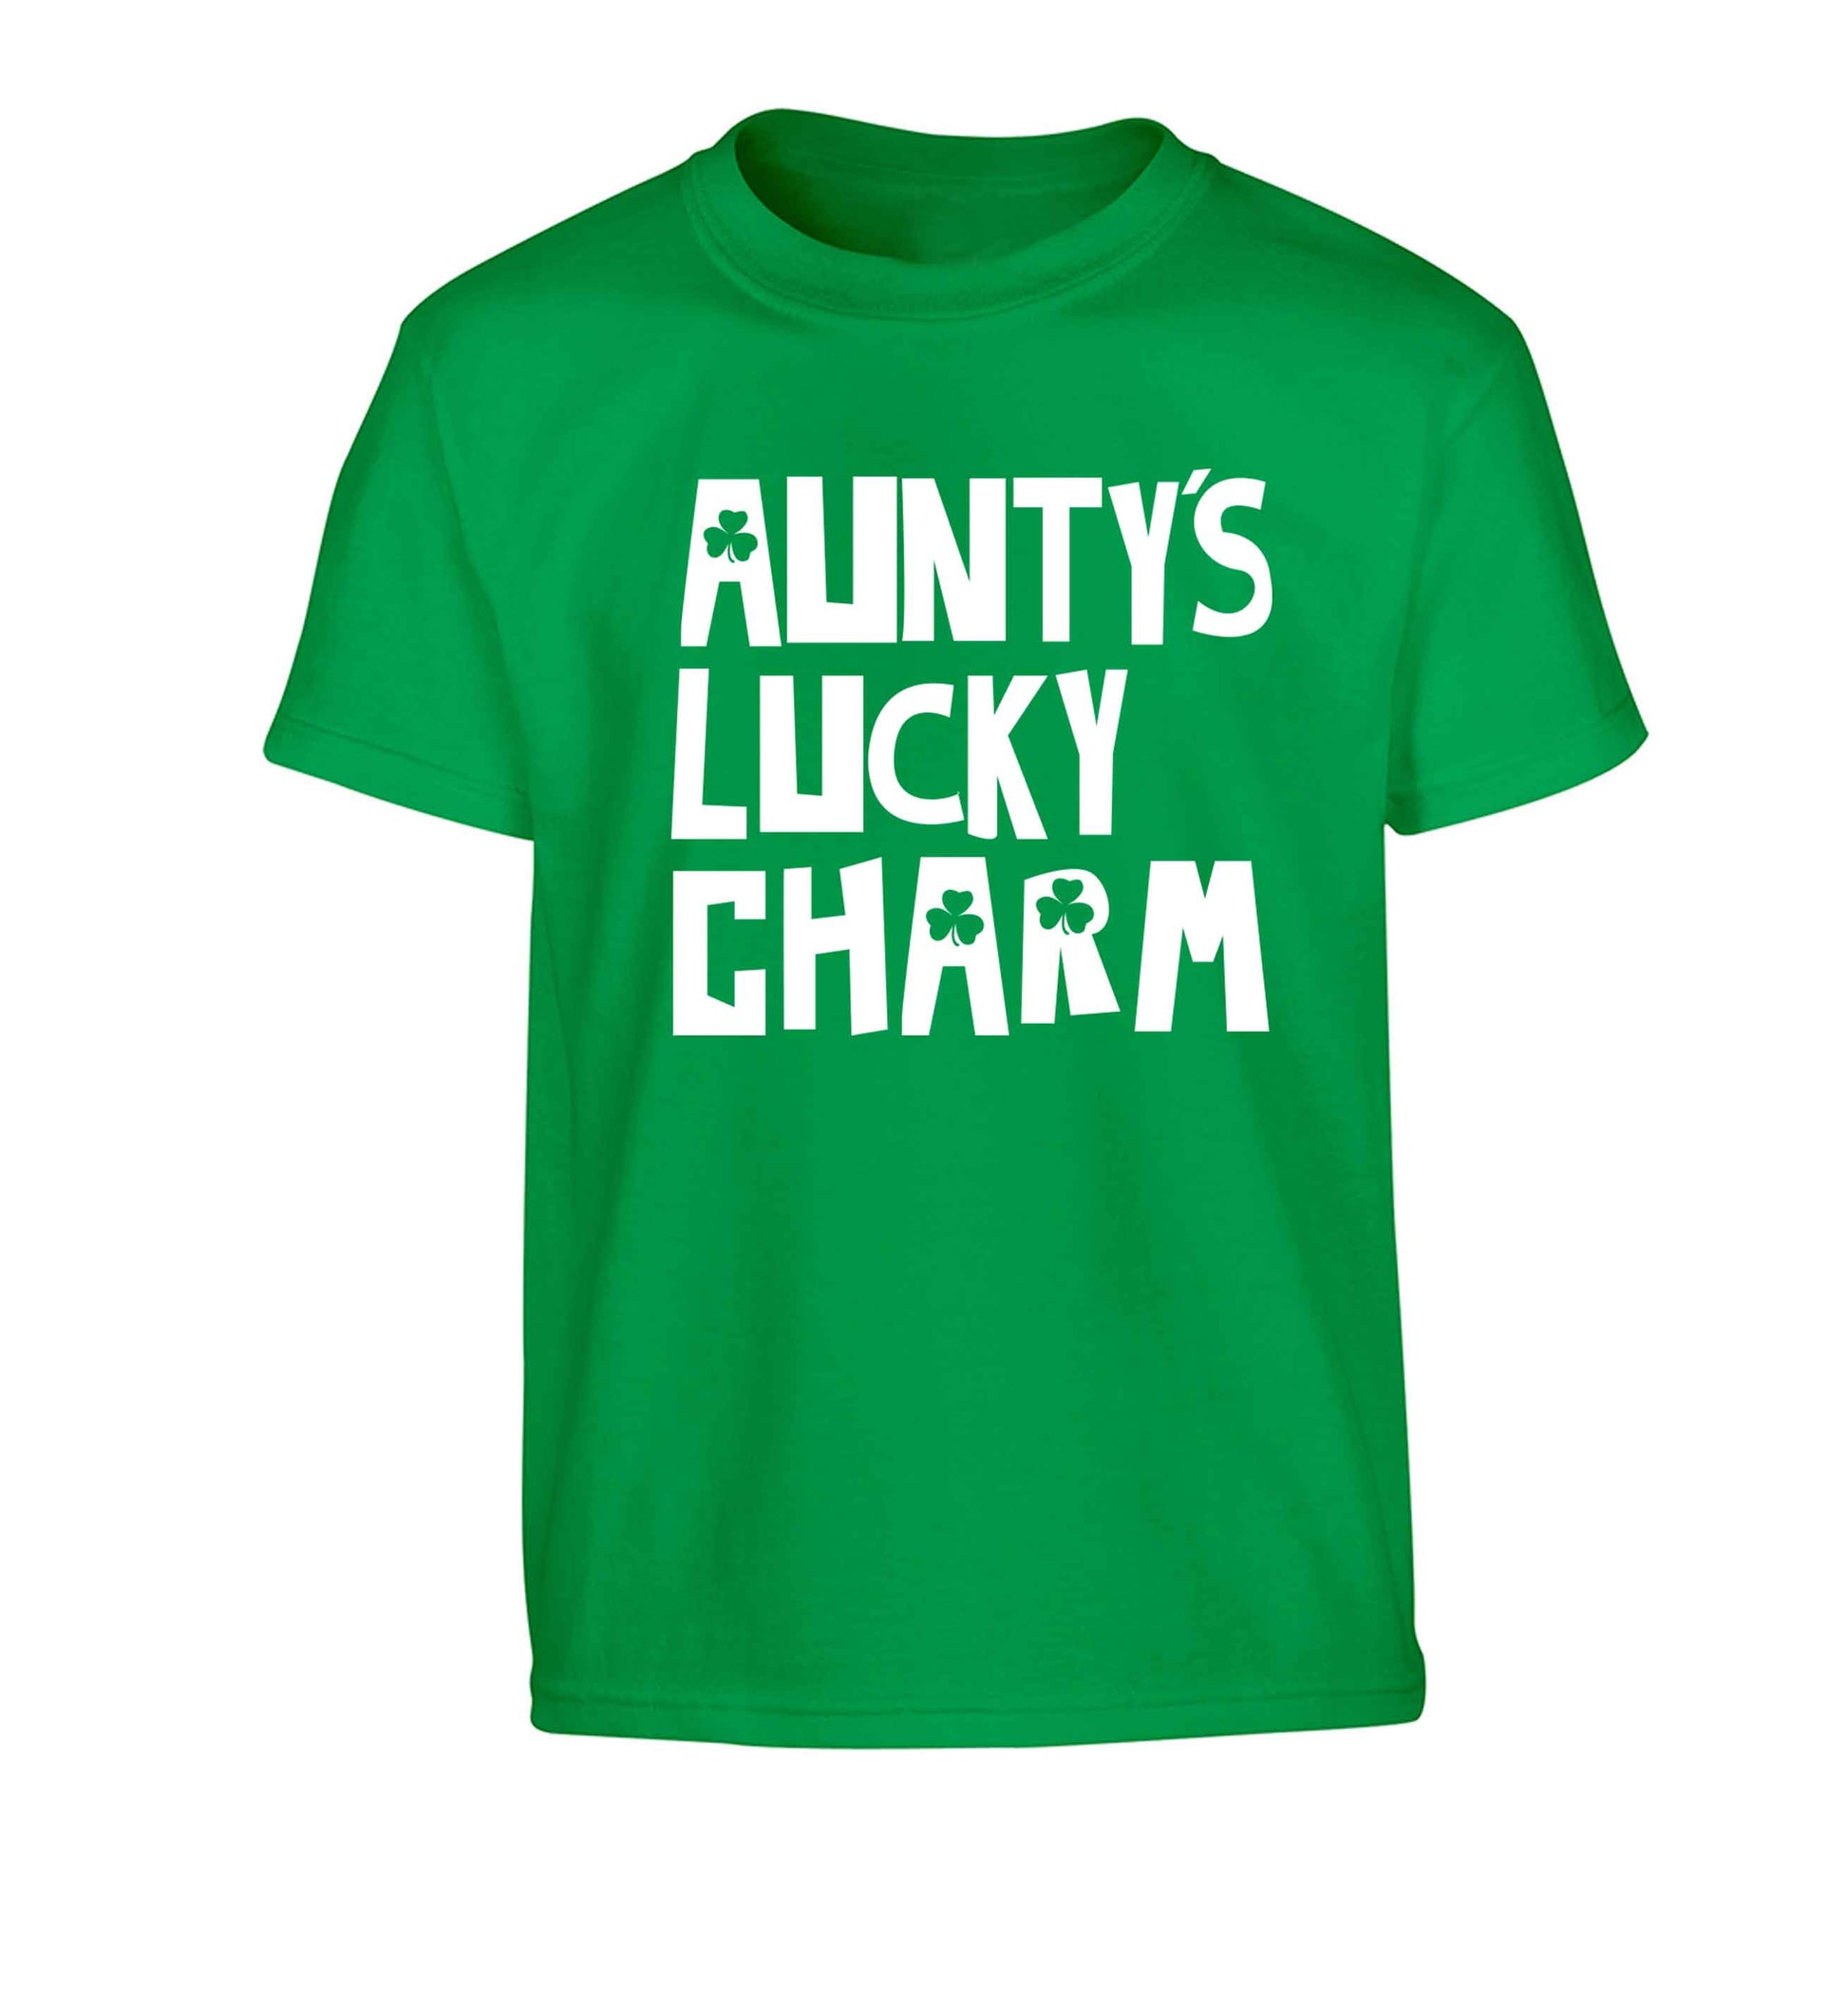 Aunty's lucky charm Children's green Tshirt 12-13 Years